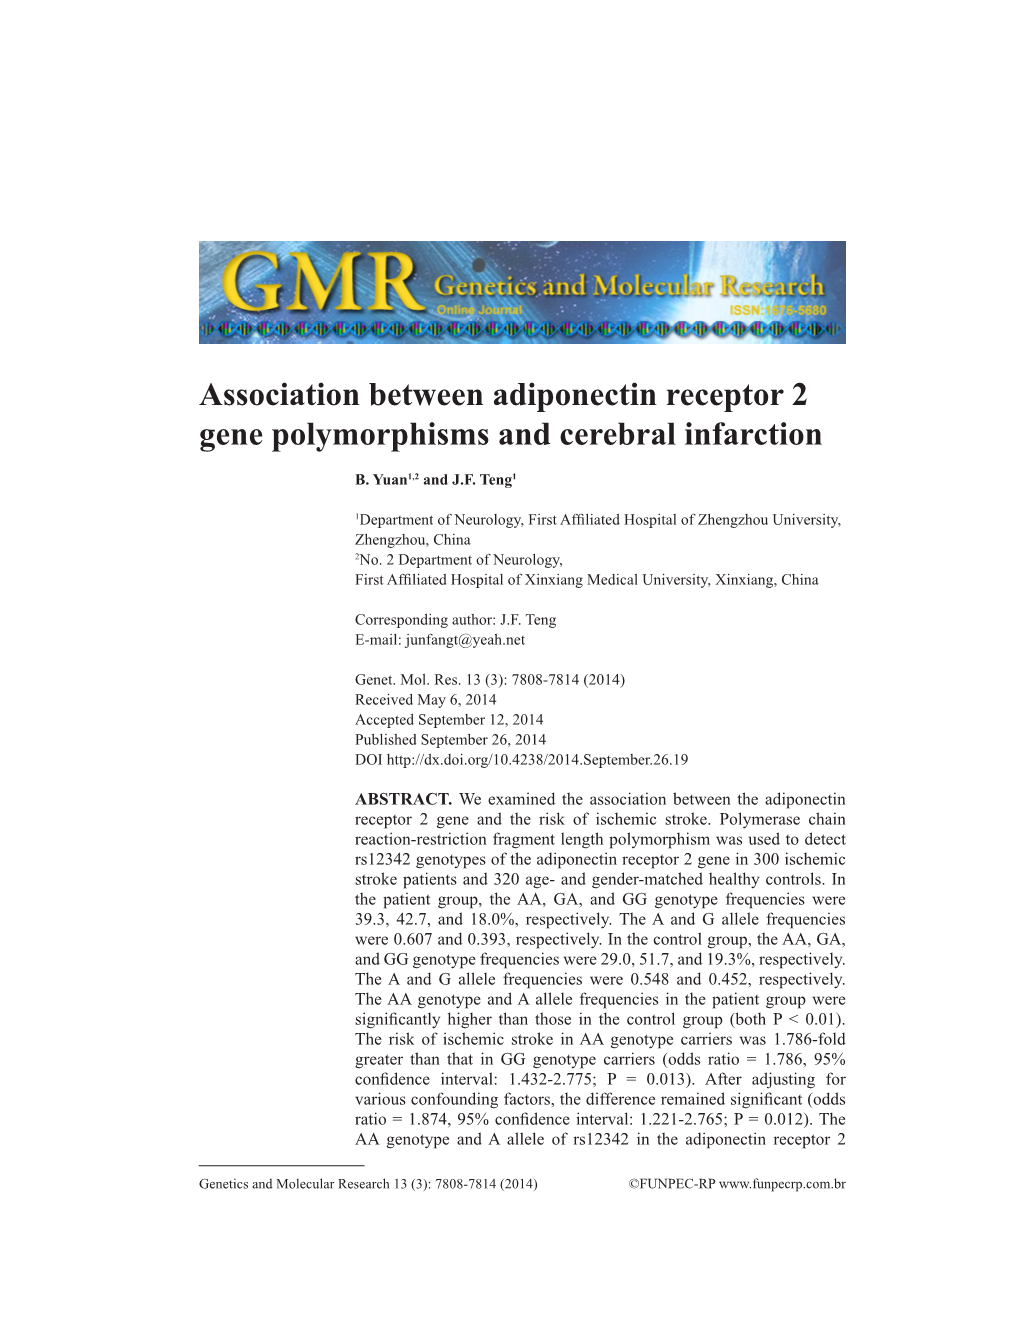 Association Between Adiponectin Receptor 2 Gene Polymorphisms and Cerebral Infarction